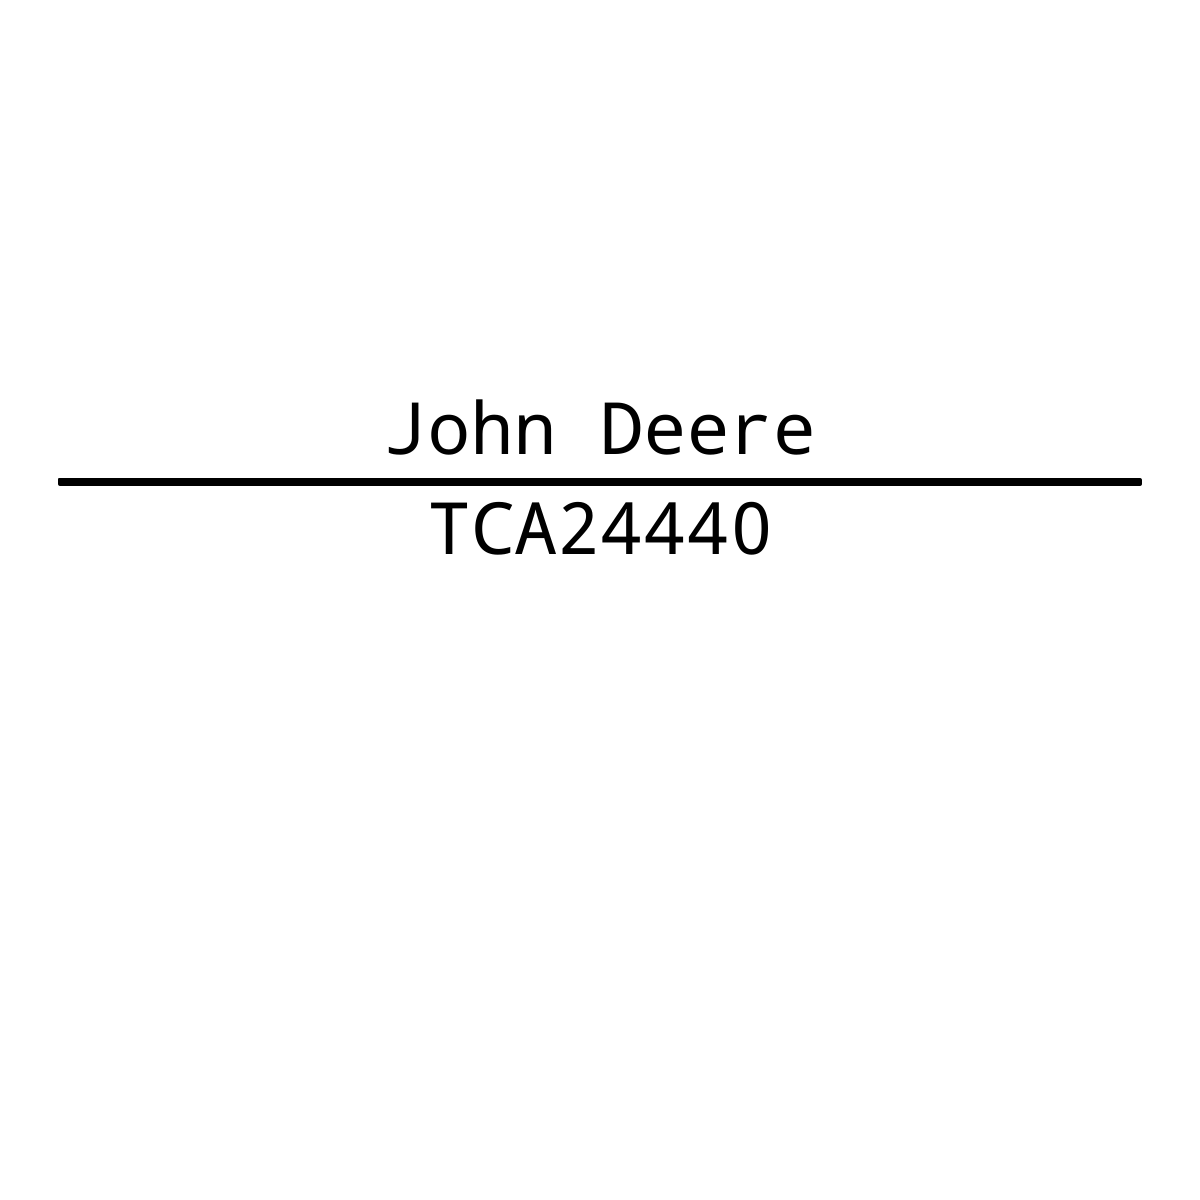 John Deere TCA24440 Wiper Blade